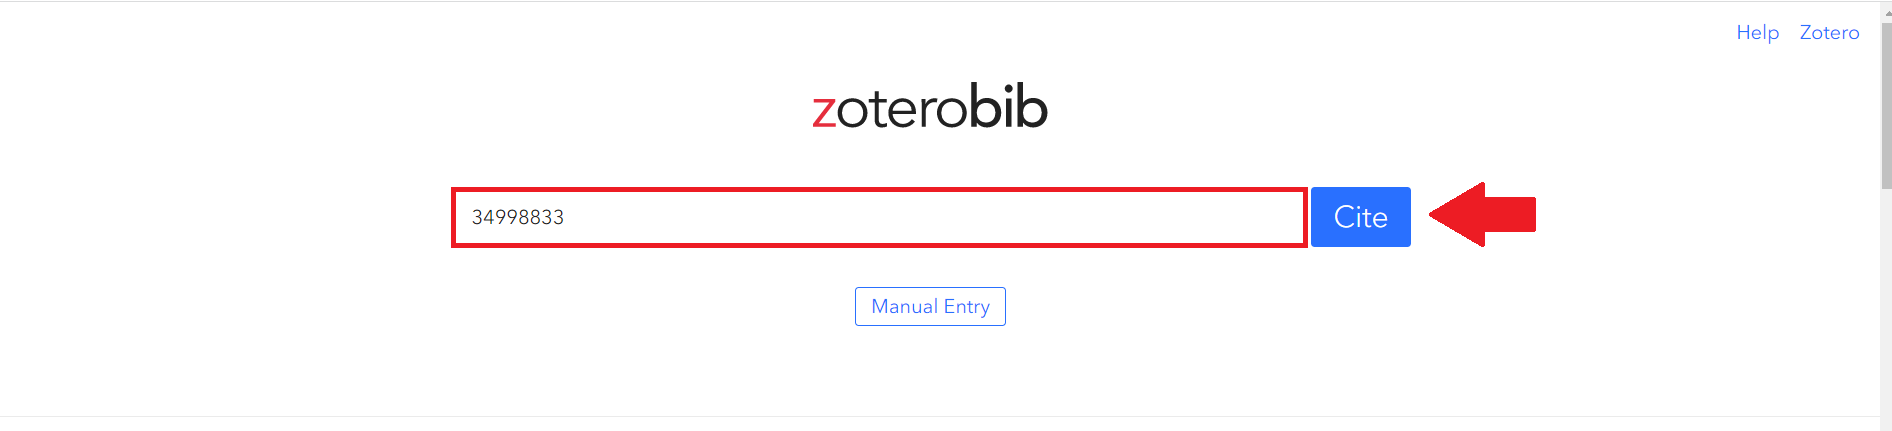 Zoterobib1